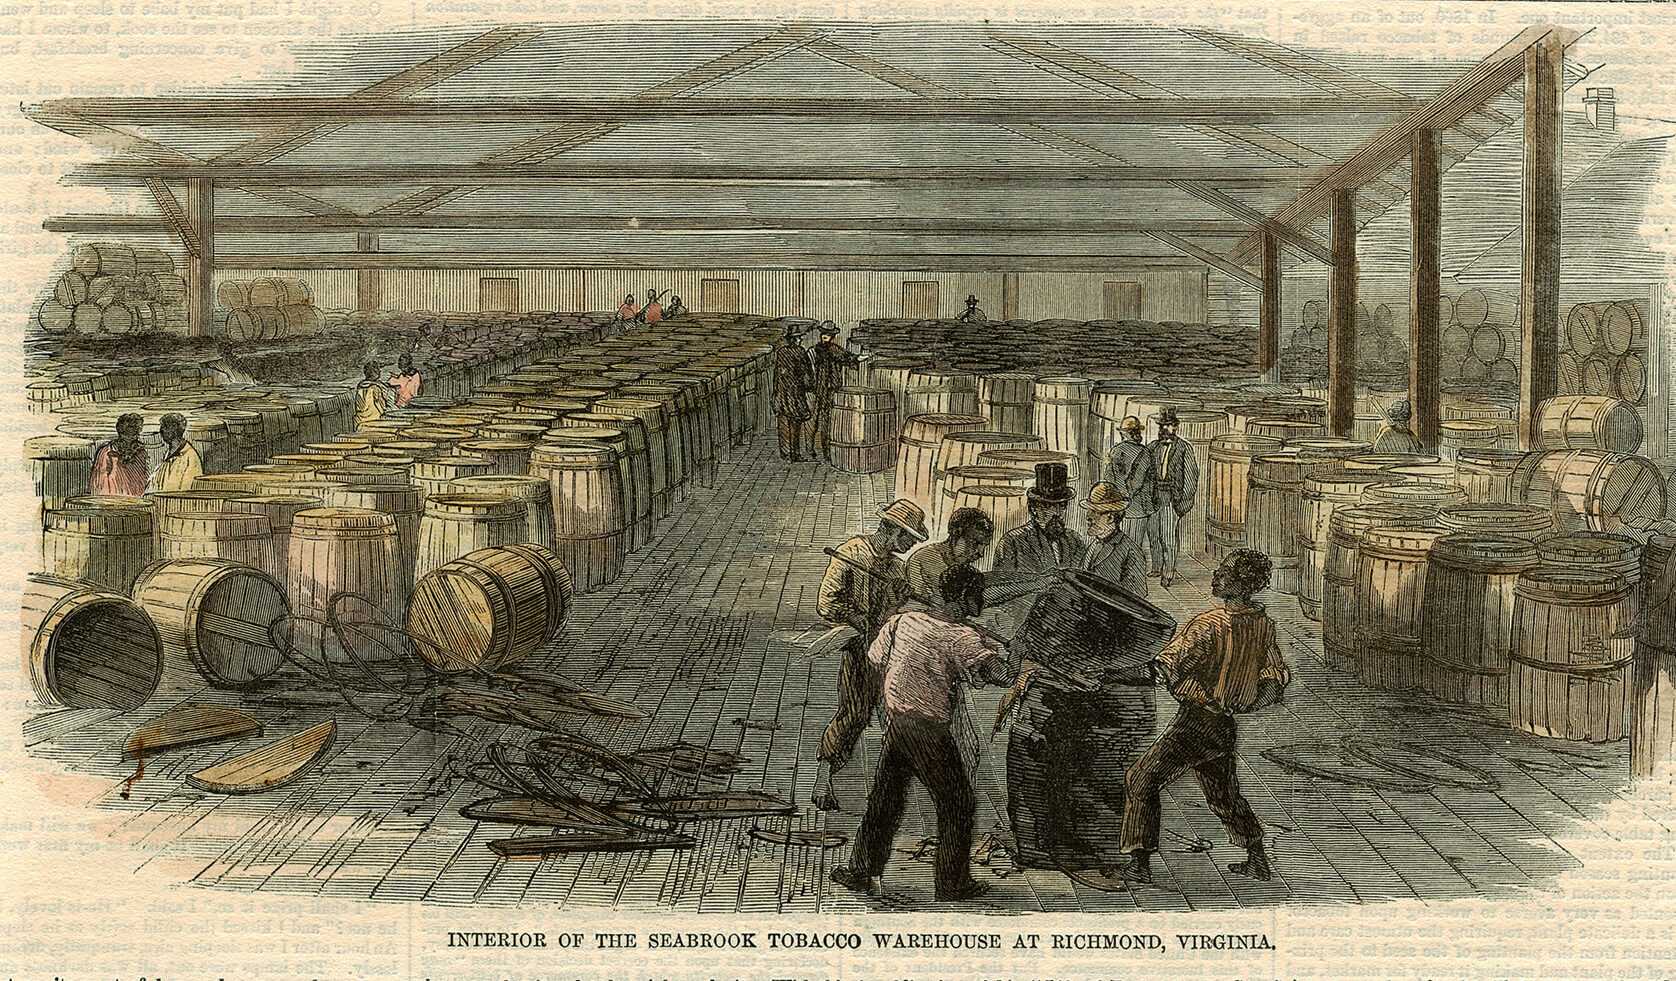 Illustration of Seabrook Tobacco Warehouse